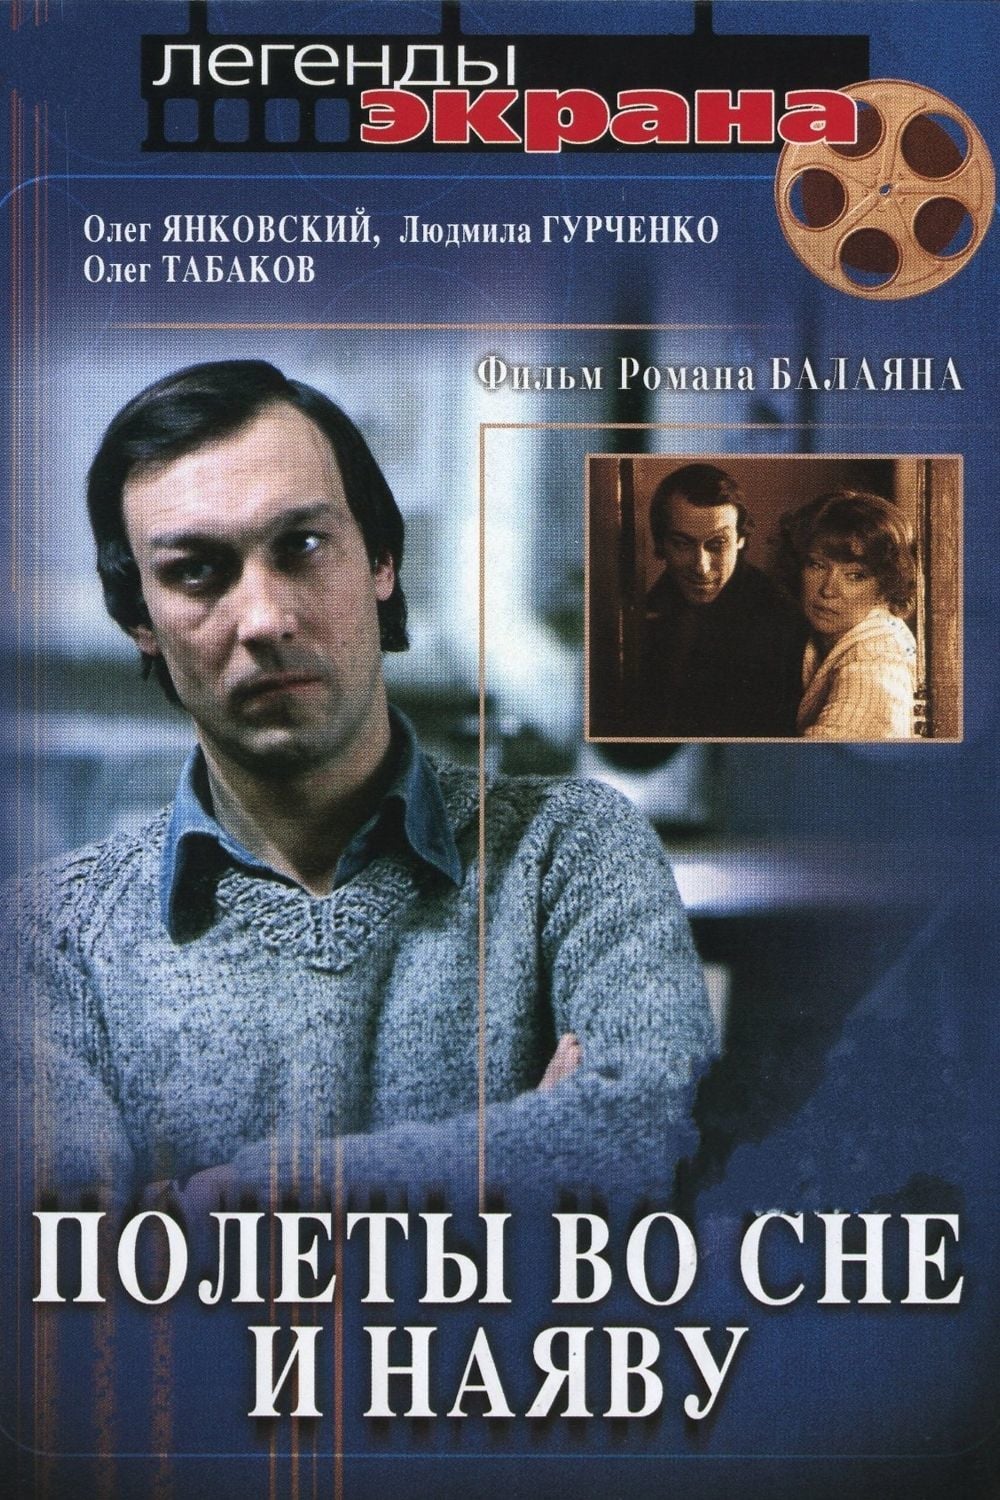      DVD/1982